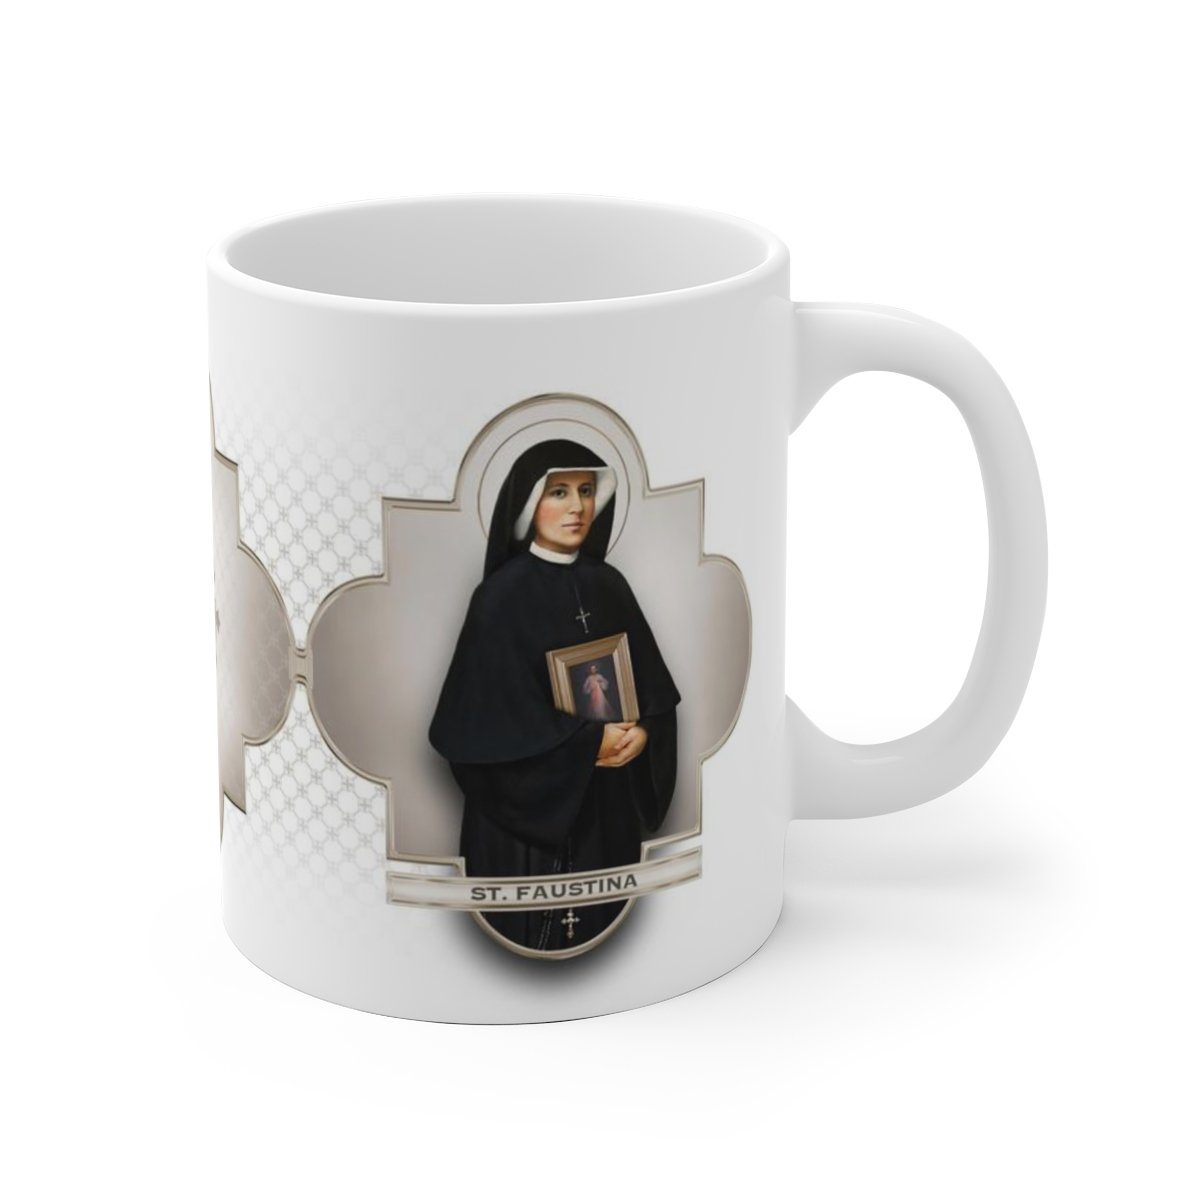 St. Faustina Ceramic Mug